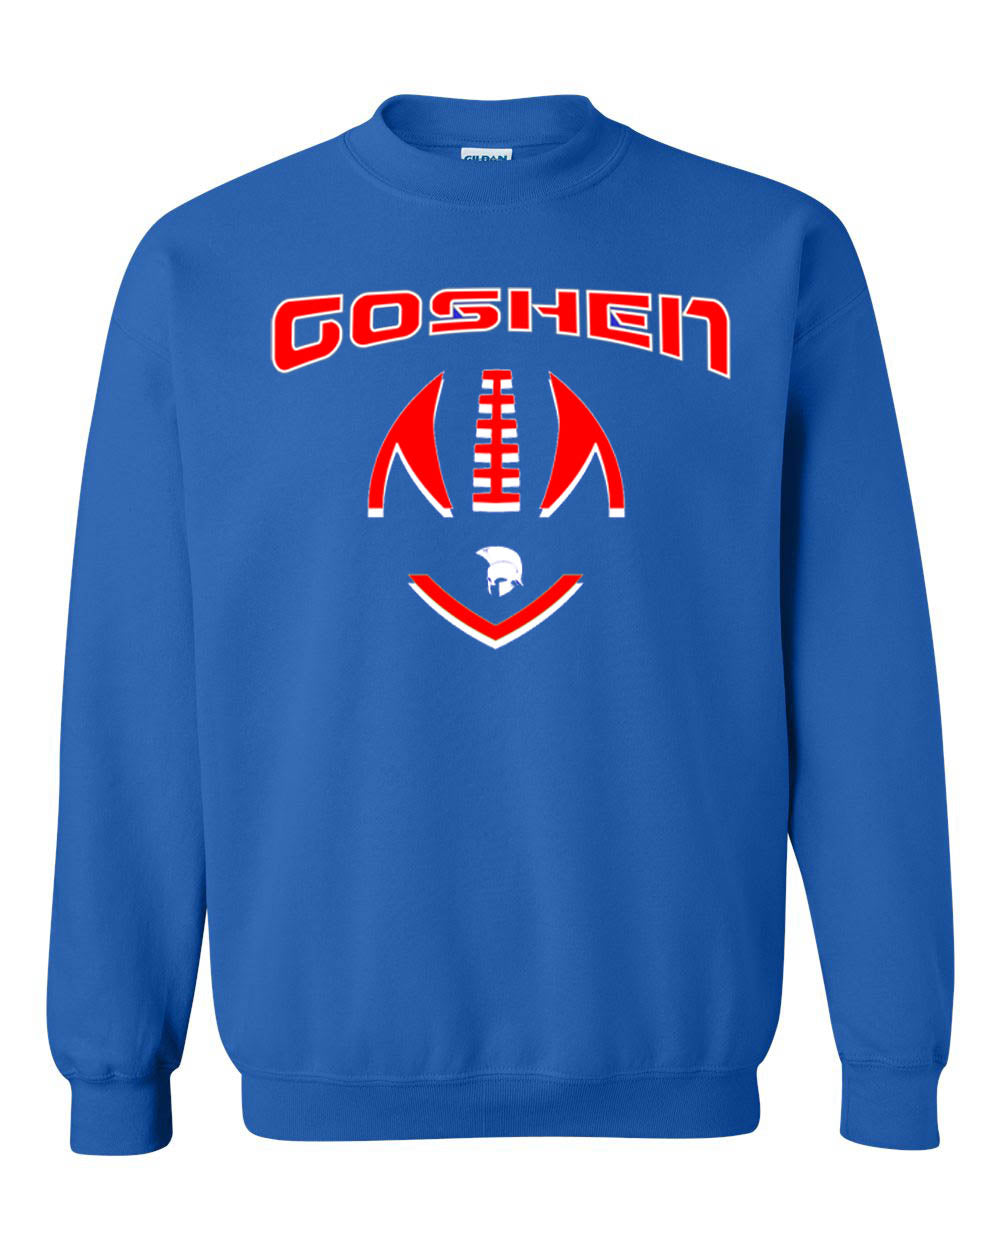 Goshen Football Design 8 non hooded sweatshirt